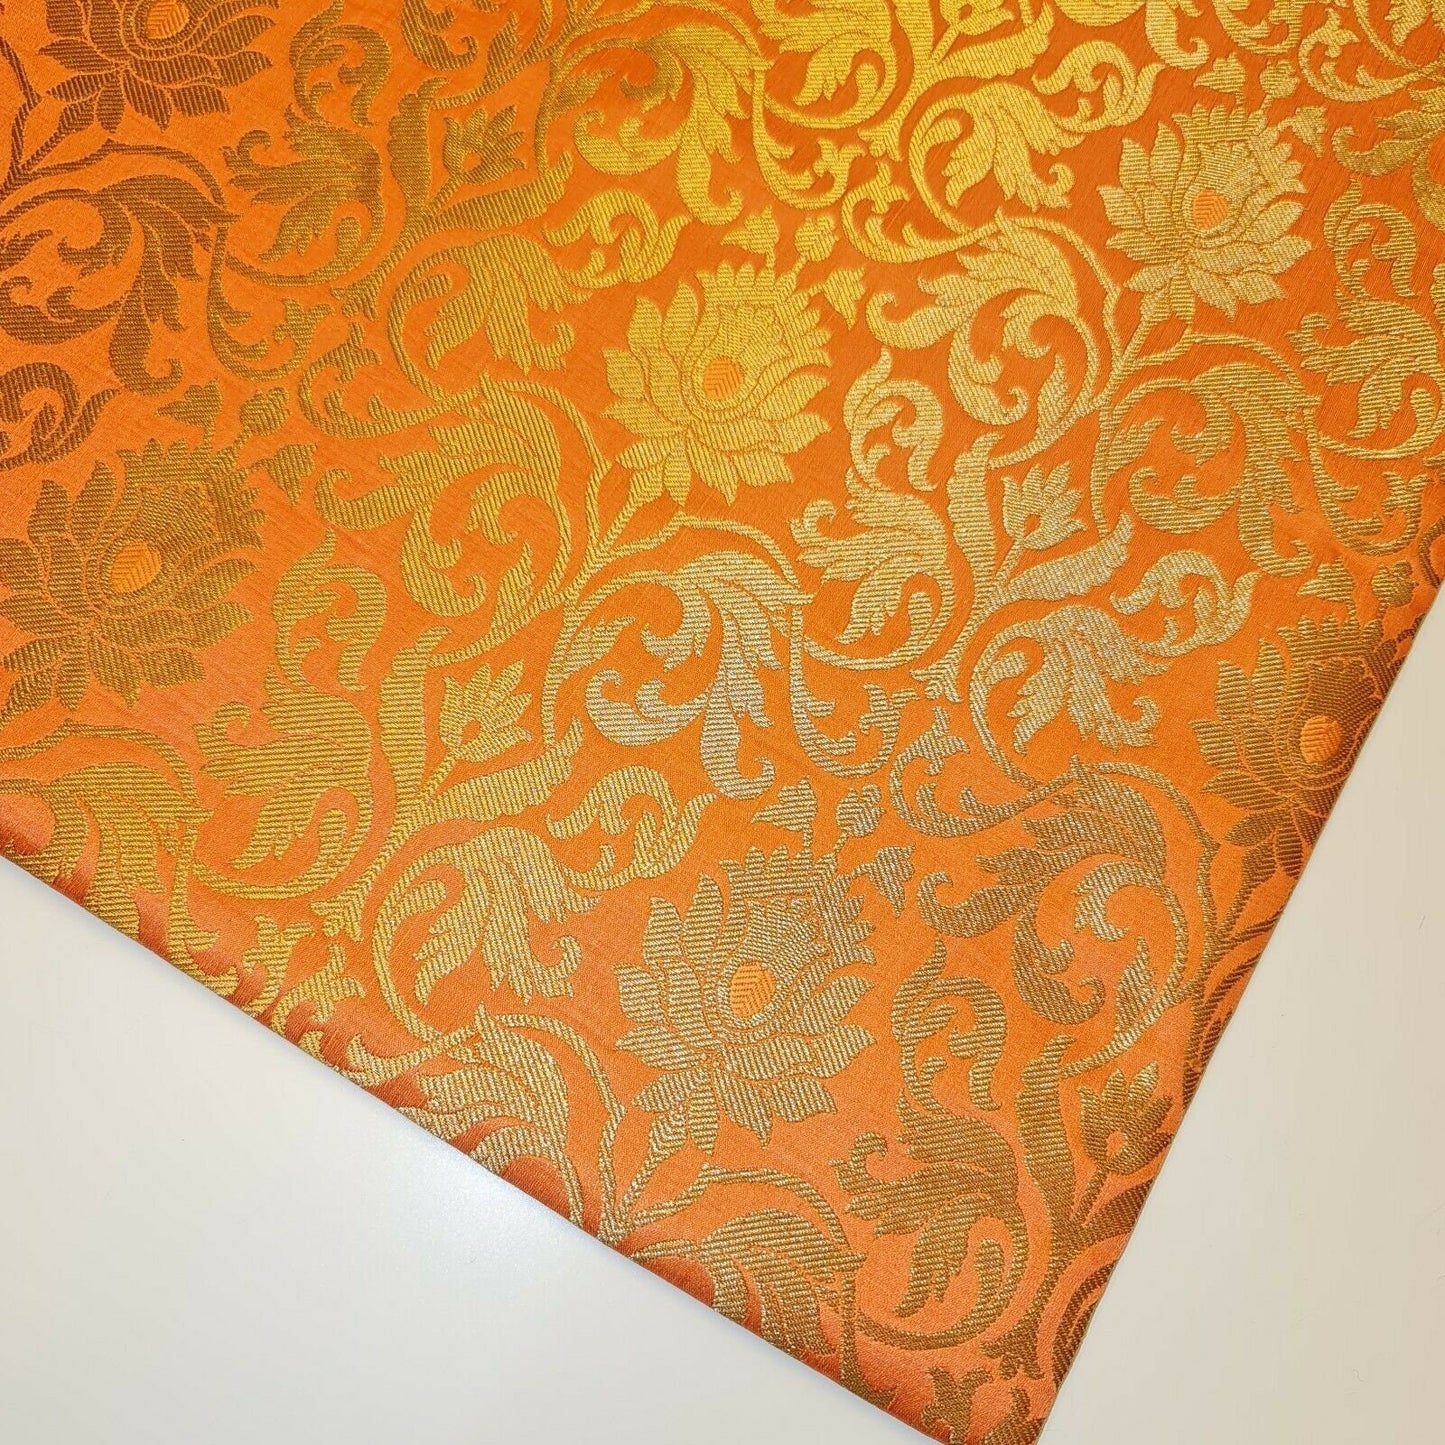 Luxurious Floral Gold Metallic Indian Banarasi Brocade Fabric 44" By The Meter (Peach)